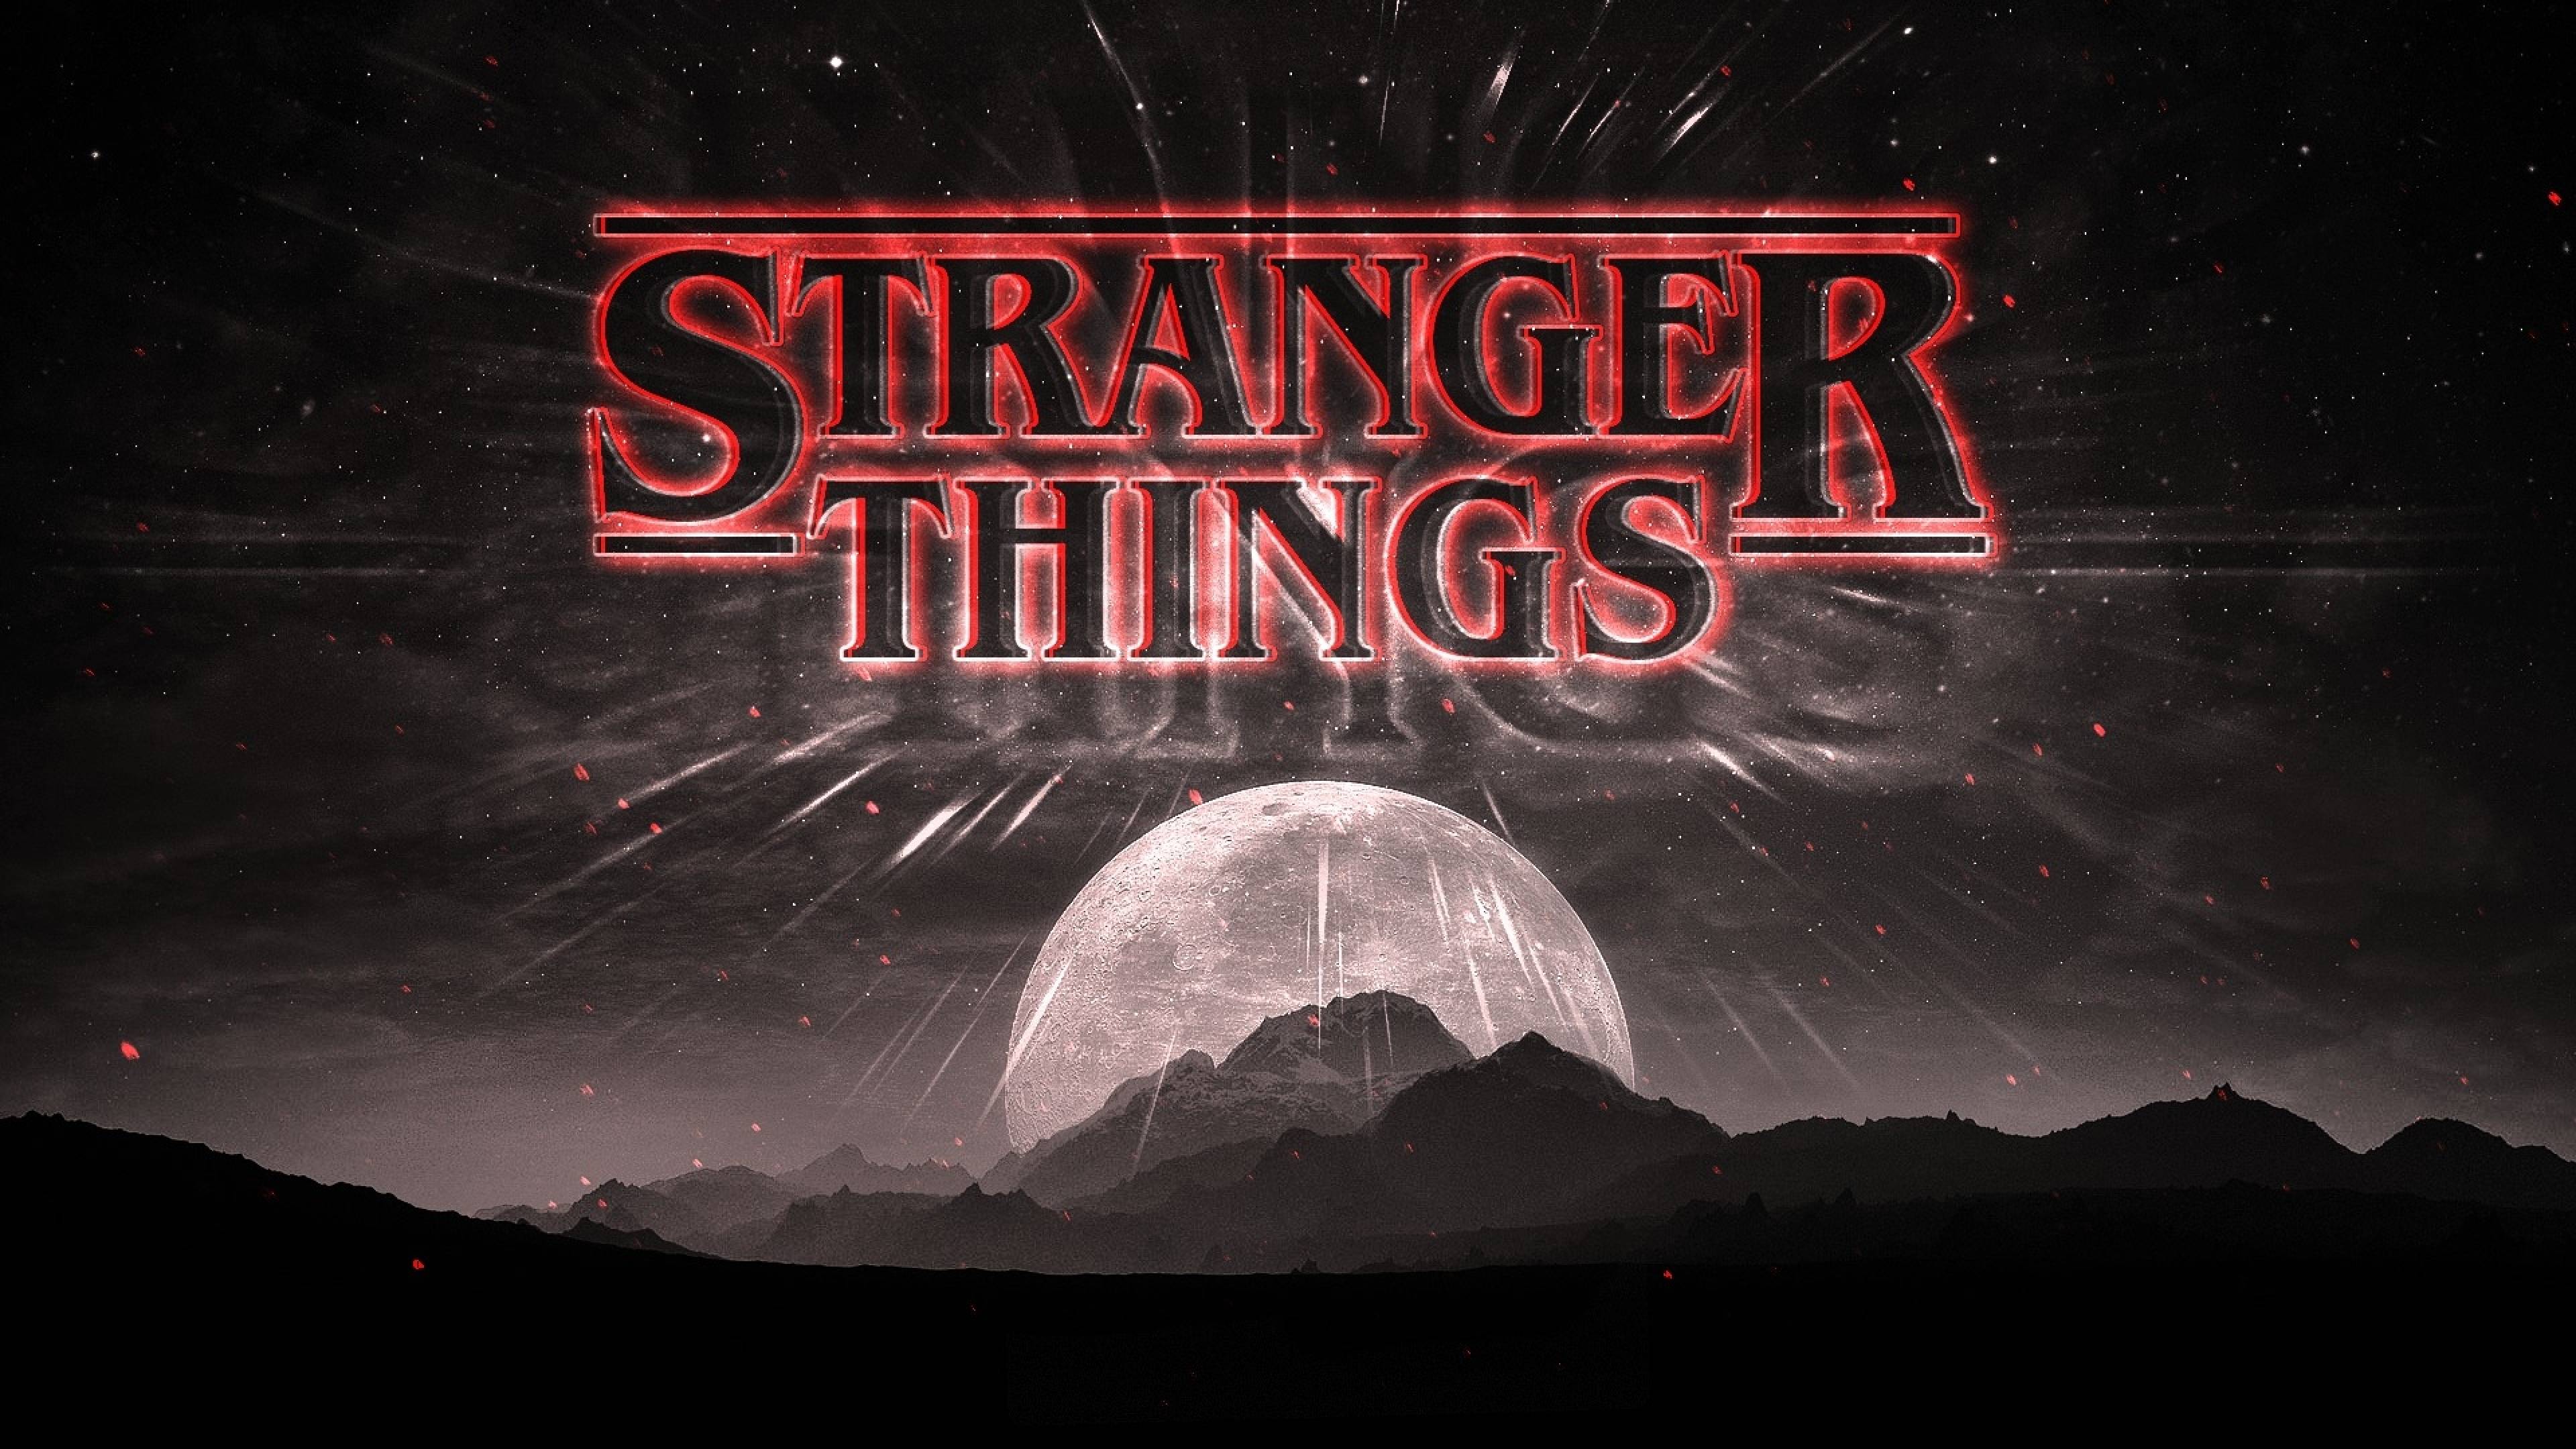 Stranger Things Dark Logo 4K Wallpaper, HD TV Series 4K Wallpaper, Image, Photo and Background